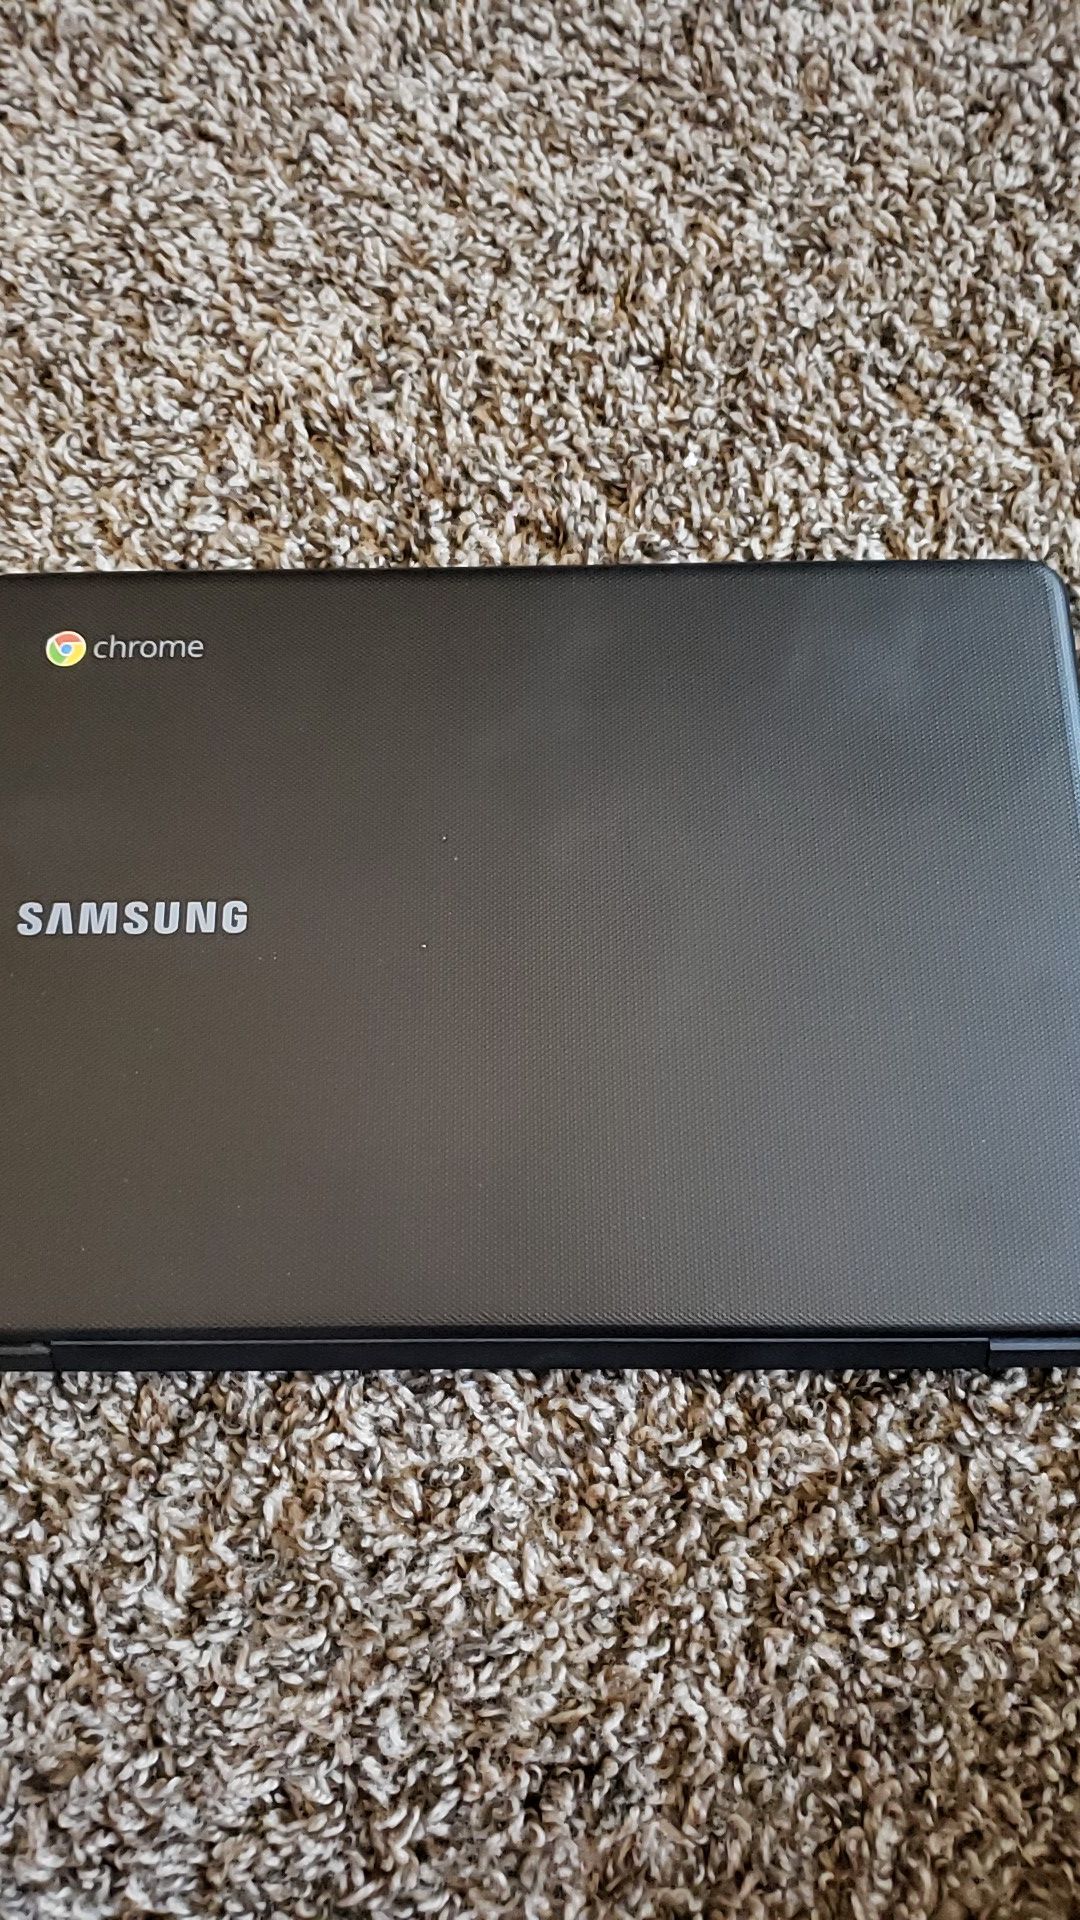 Chrome, Samsung mini laptop